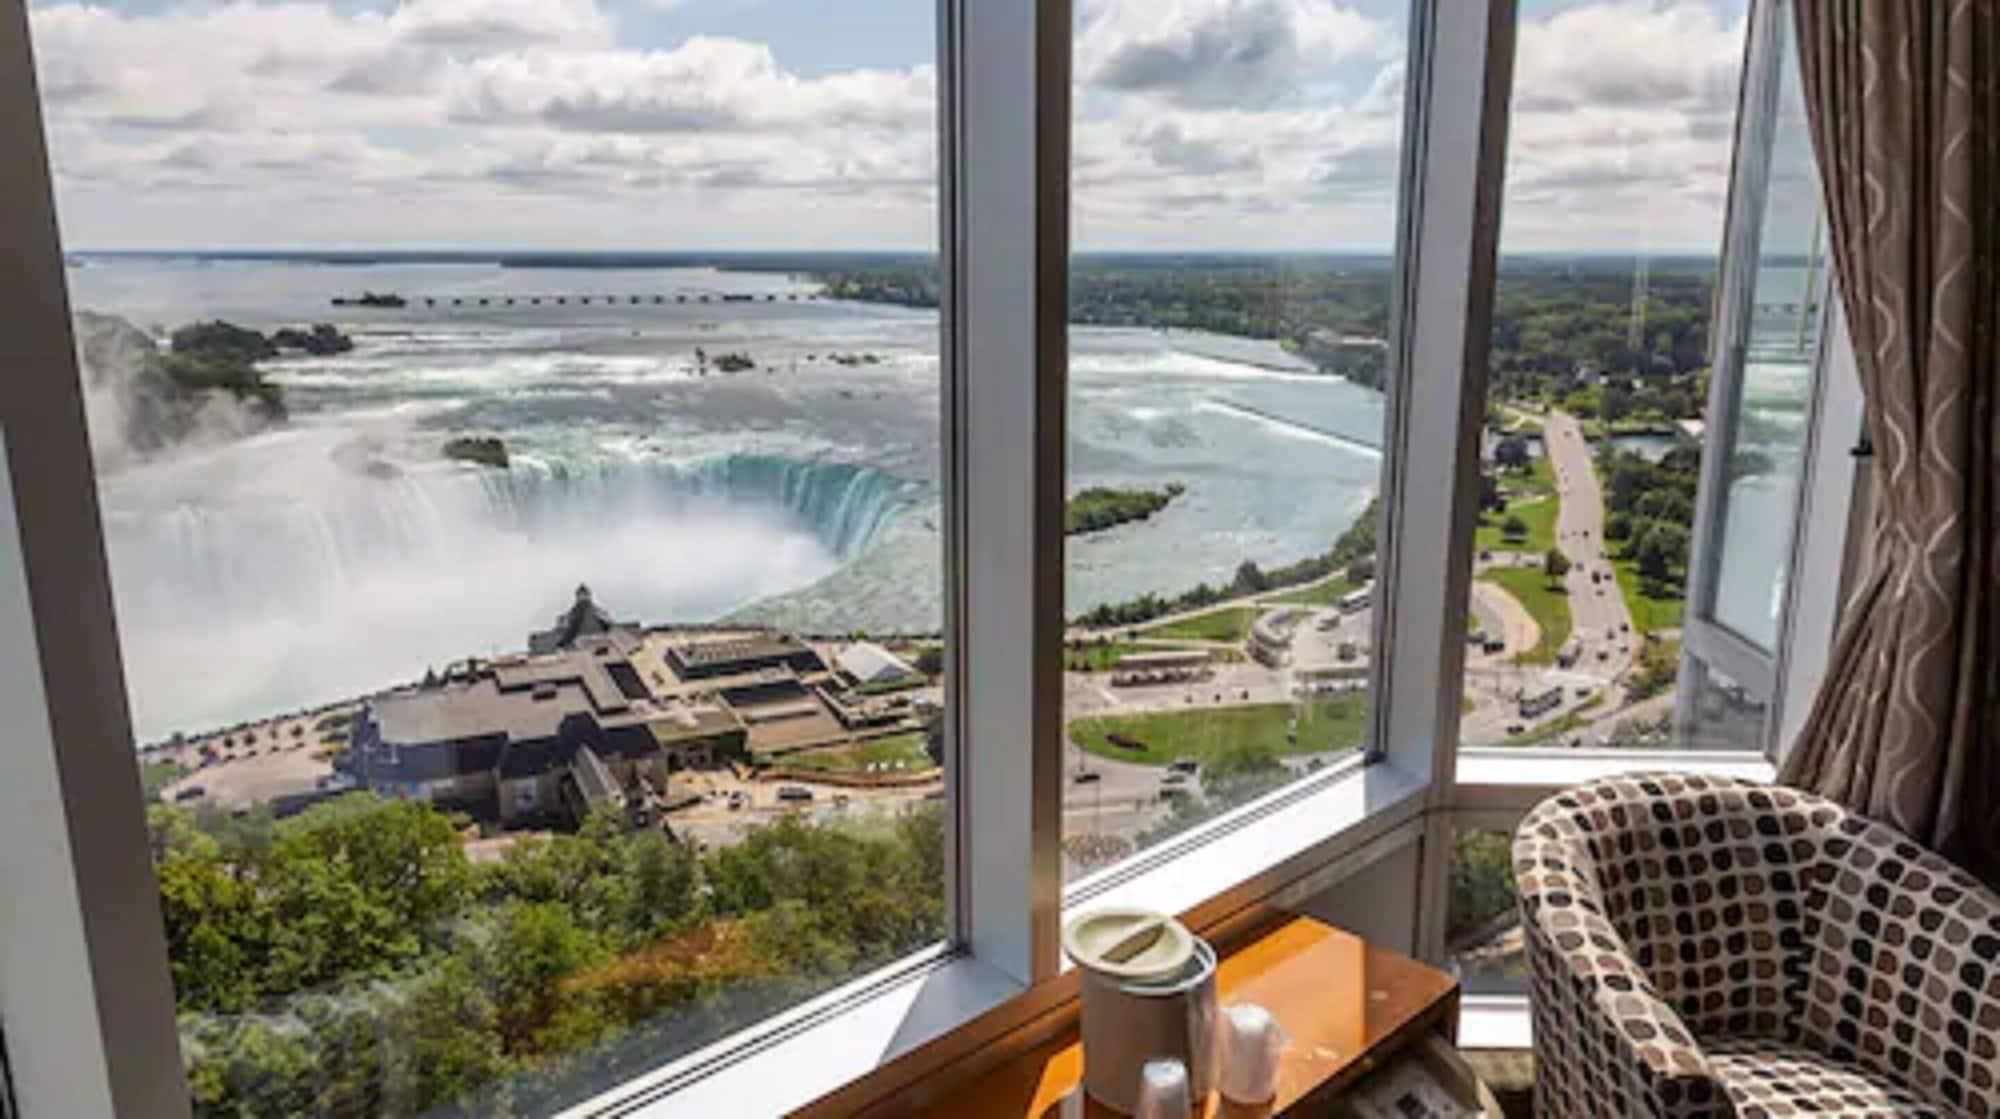 The Oakes Hotel Overlooking The Falls Niagara Falls Exterior foto